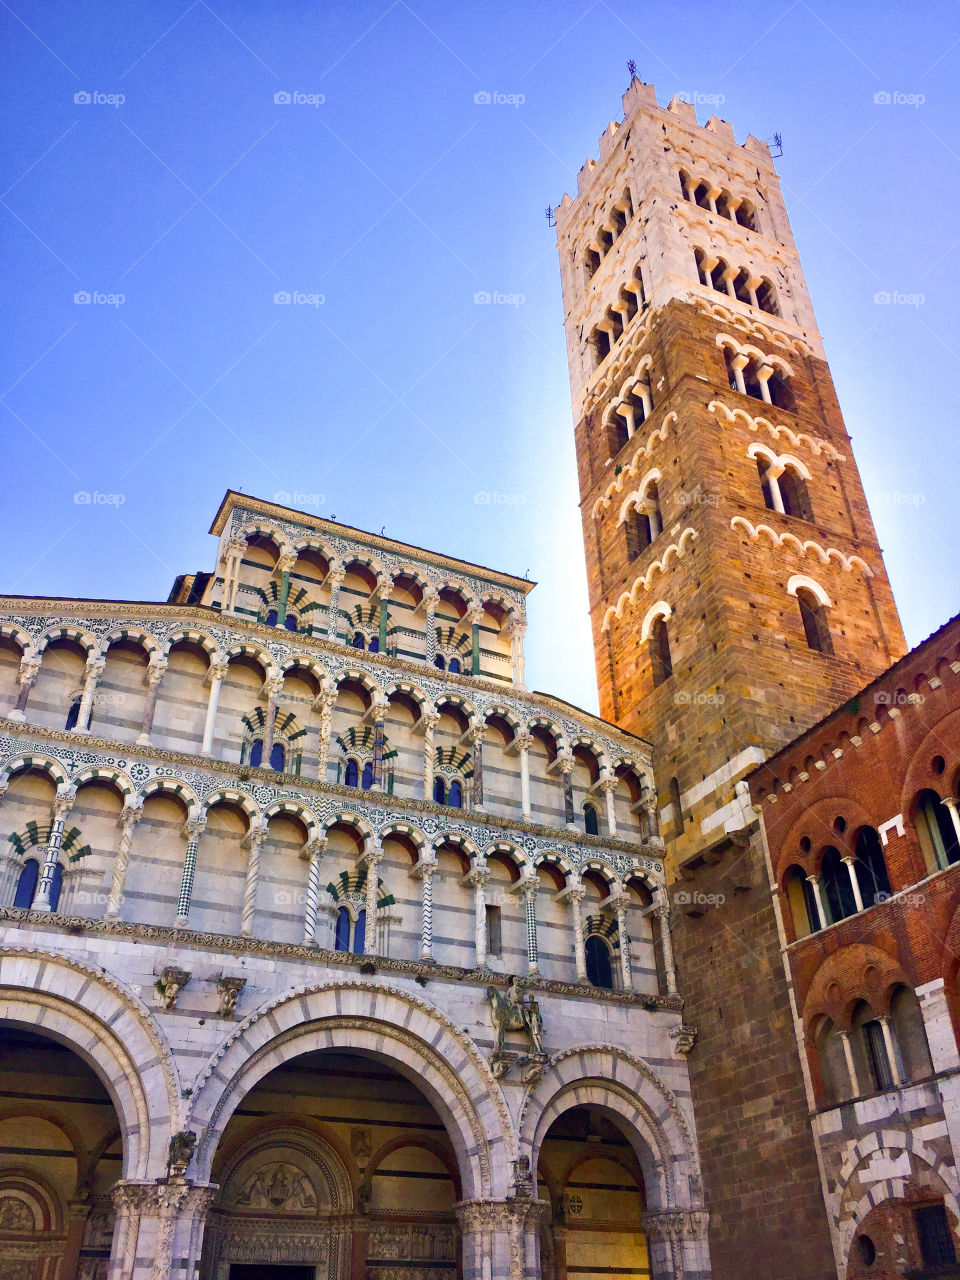 Italian marble church facade with sun glow behind the tower